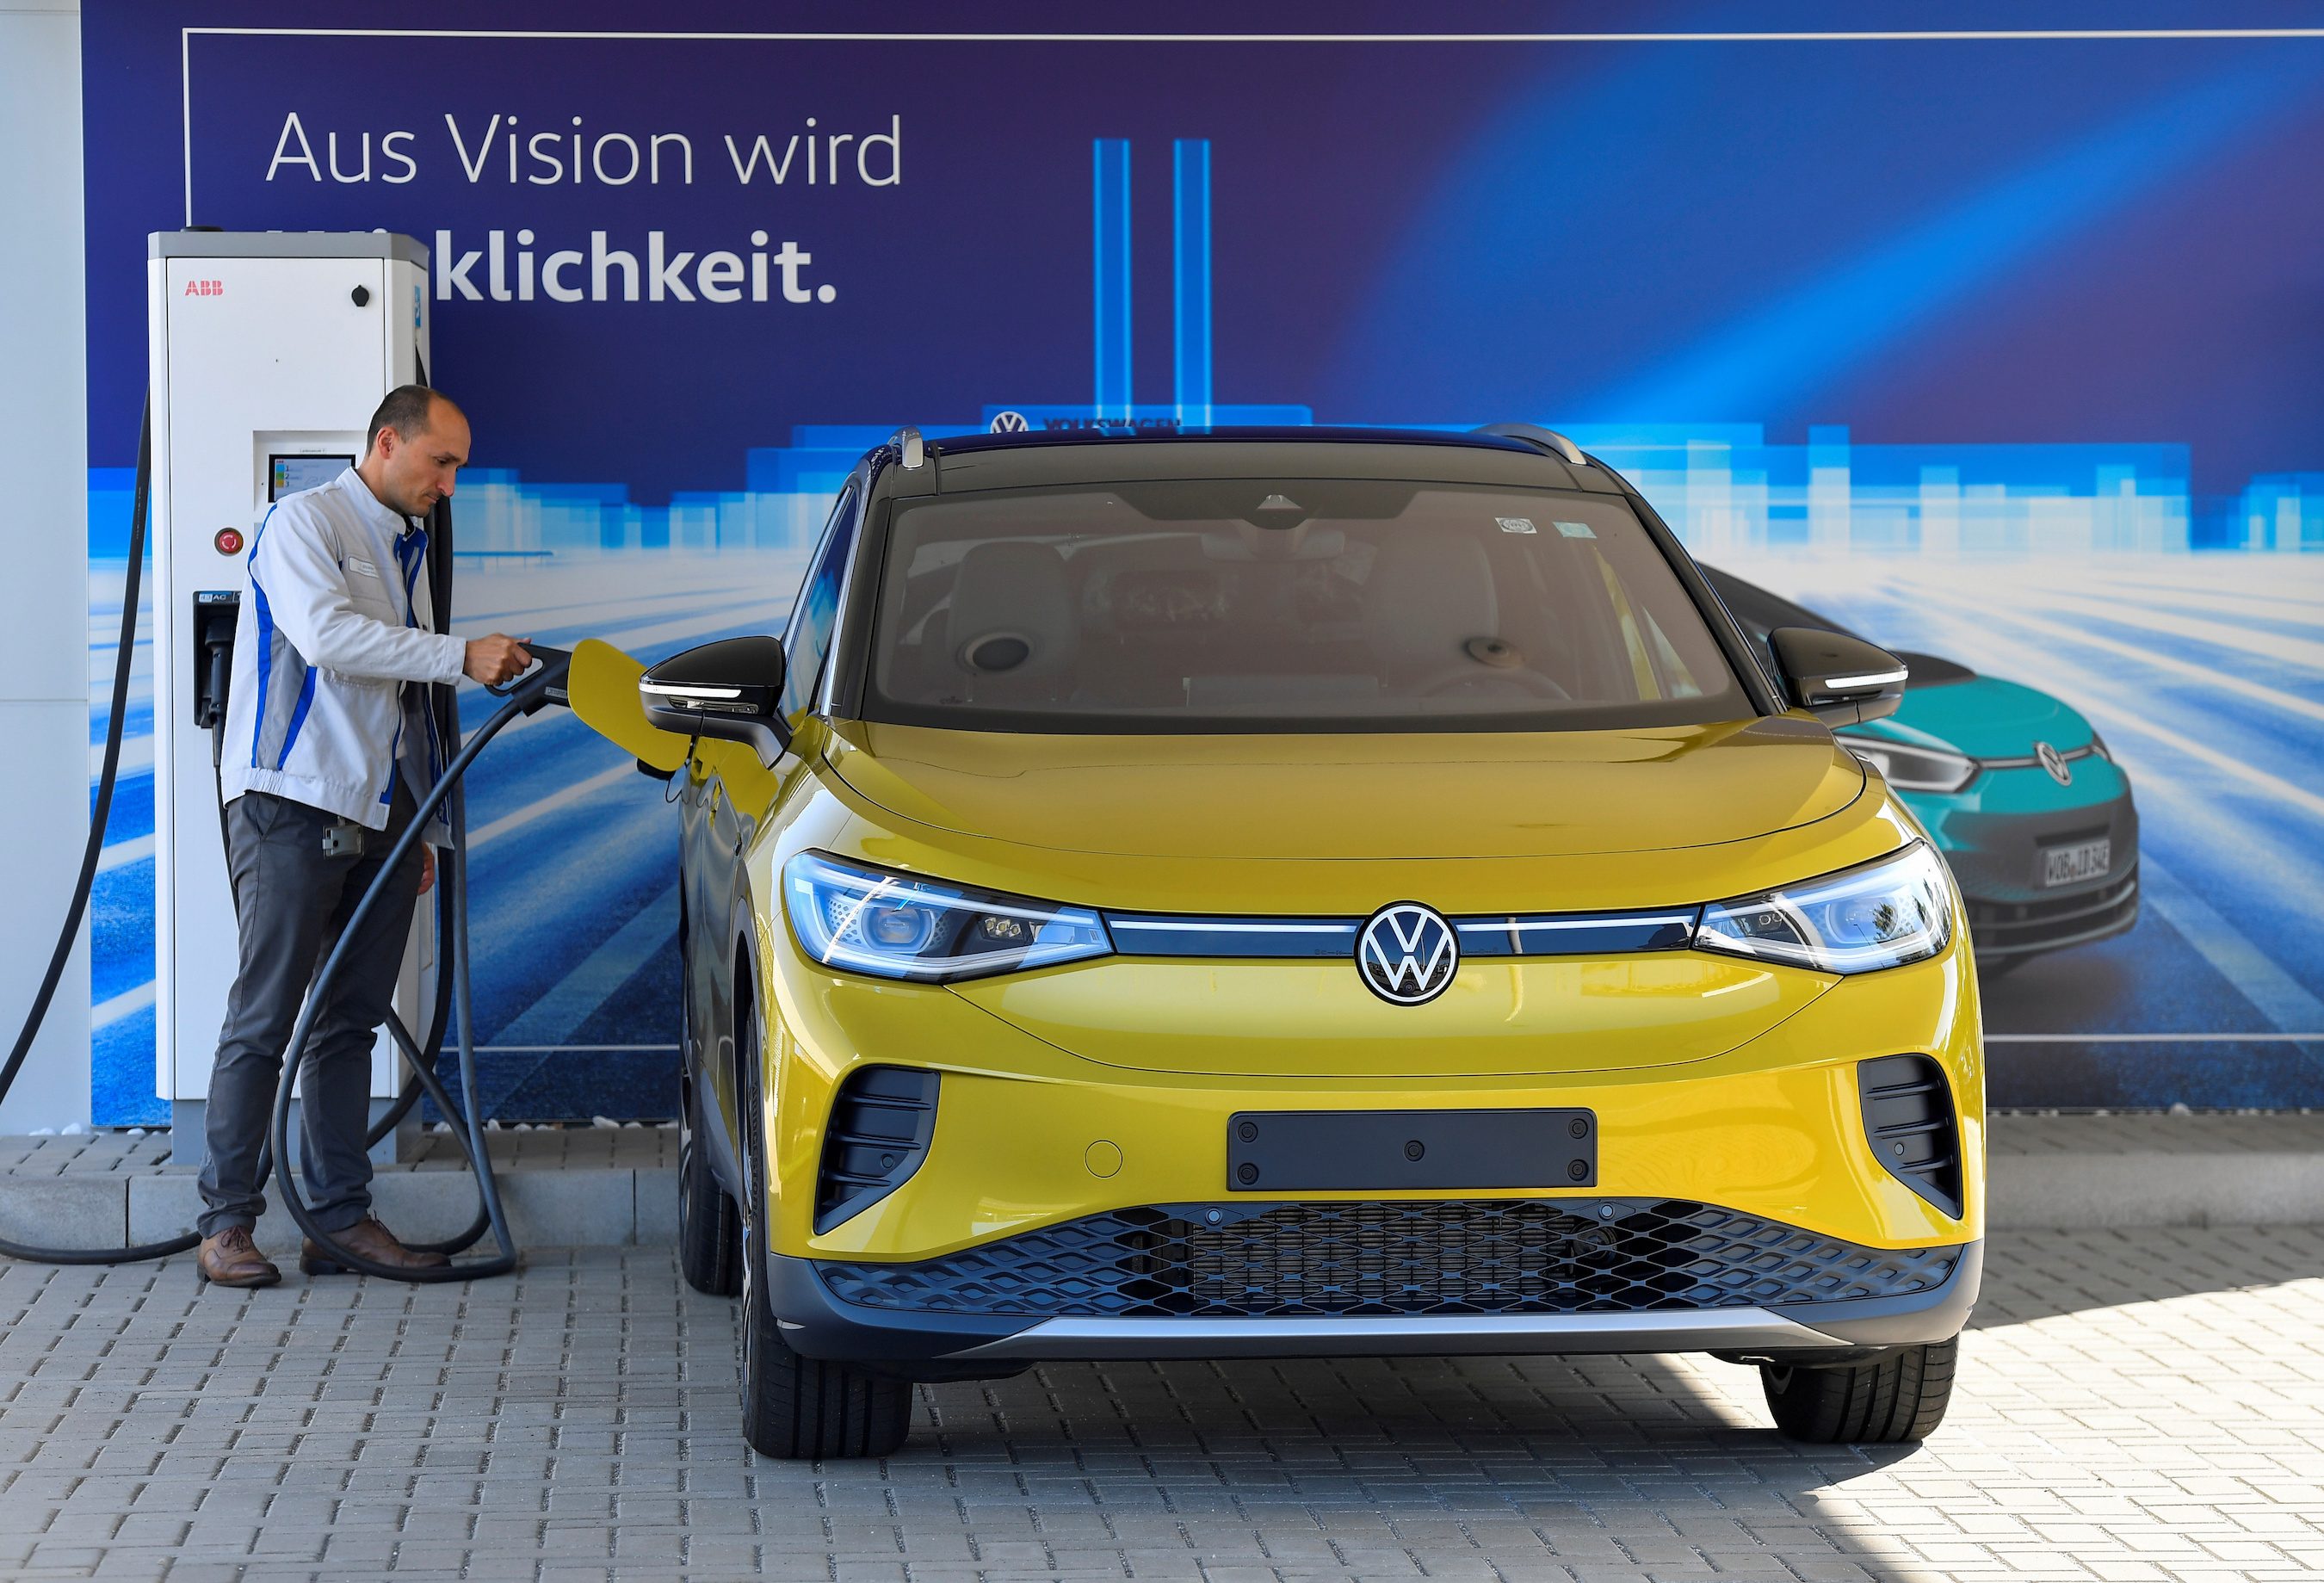 Electric ambitions drive Volkswagen’s market value towards $150 billion